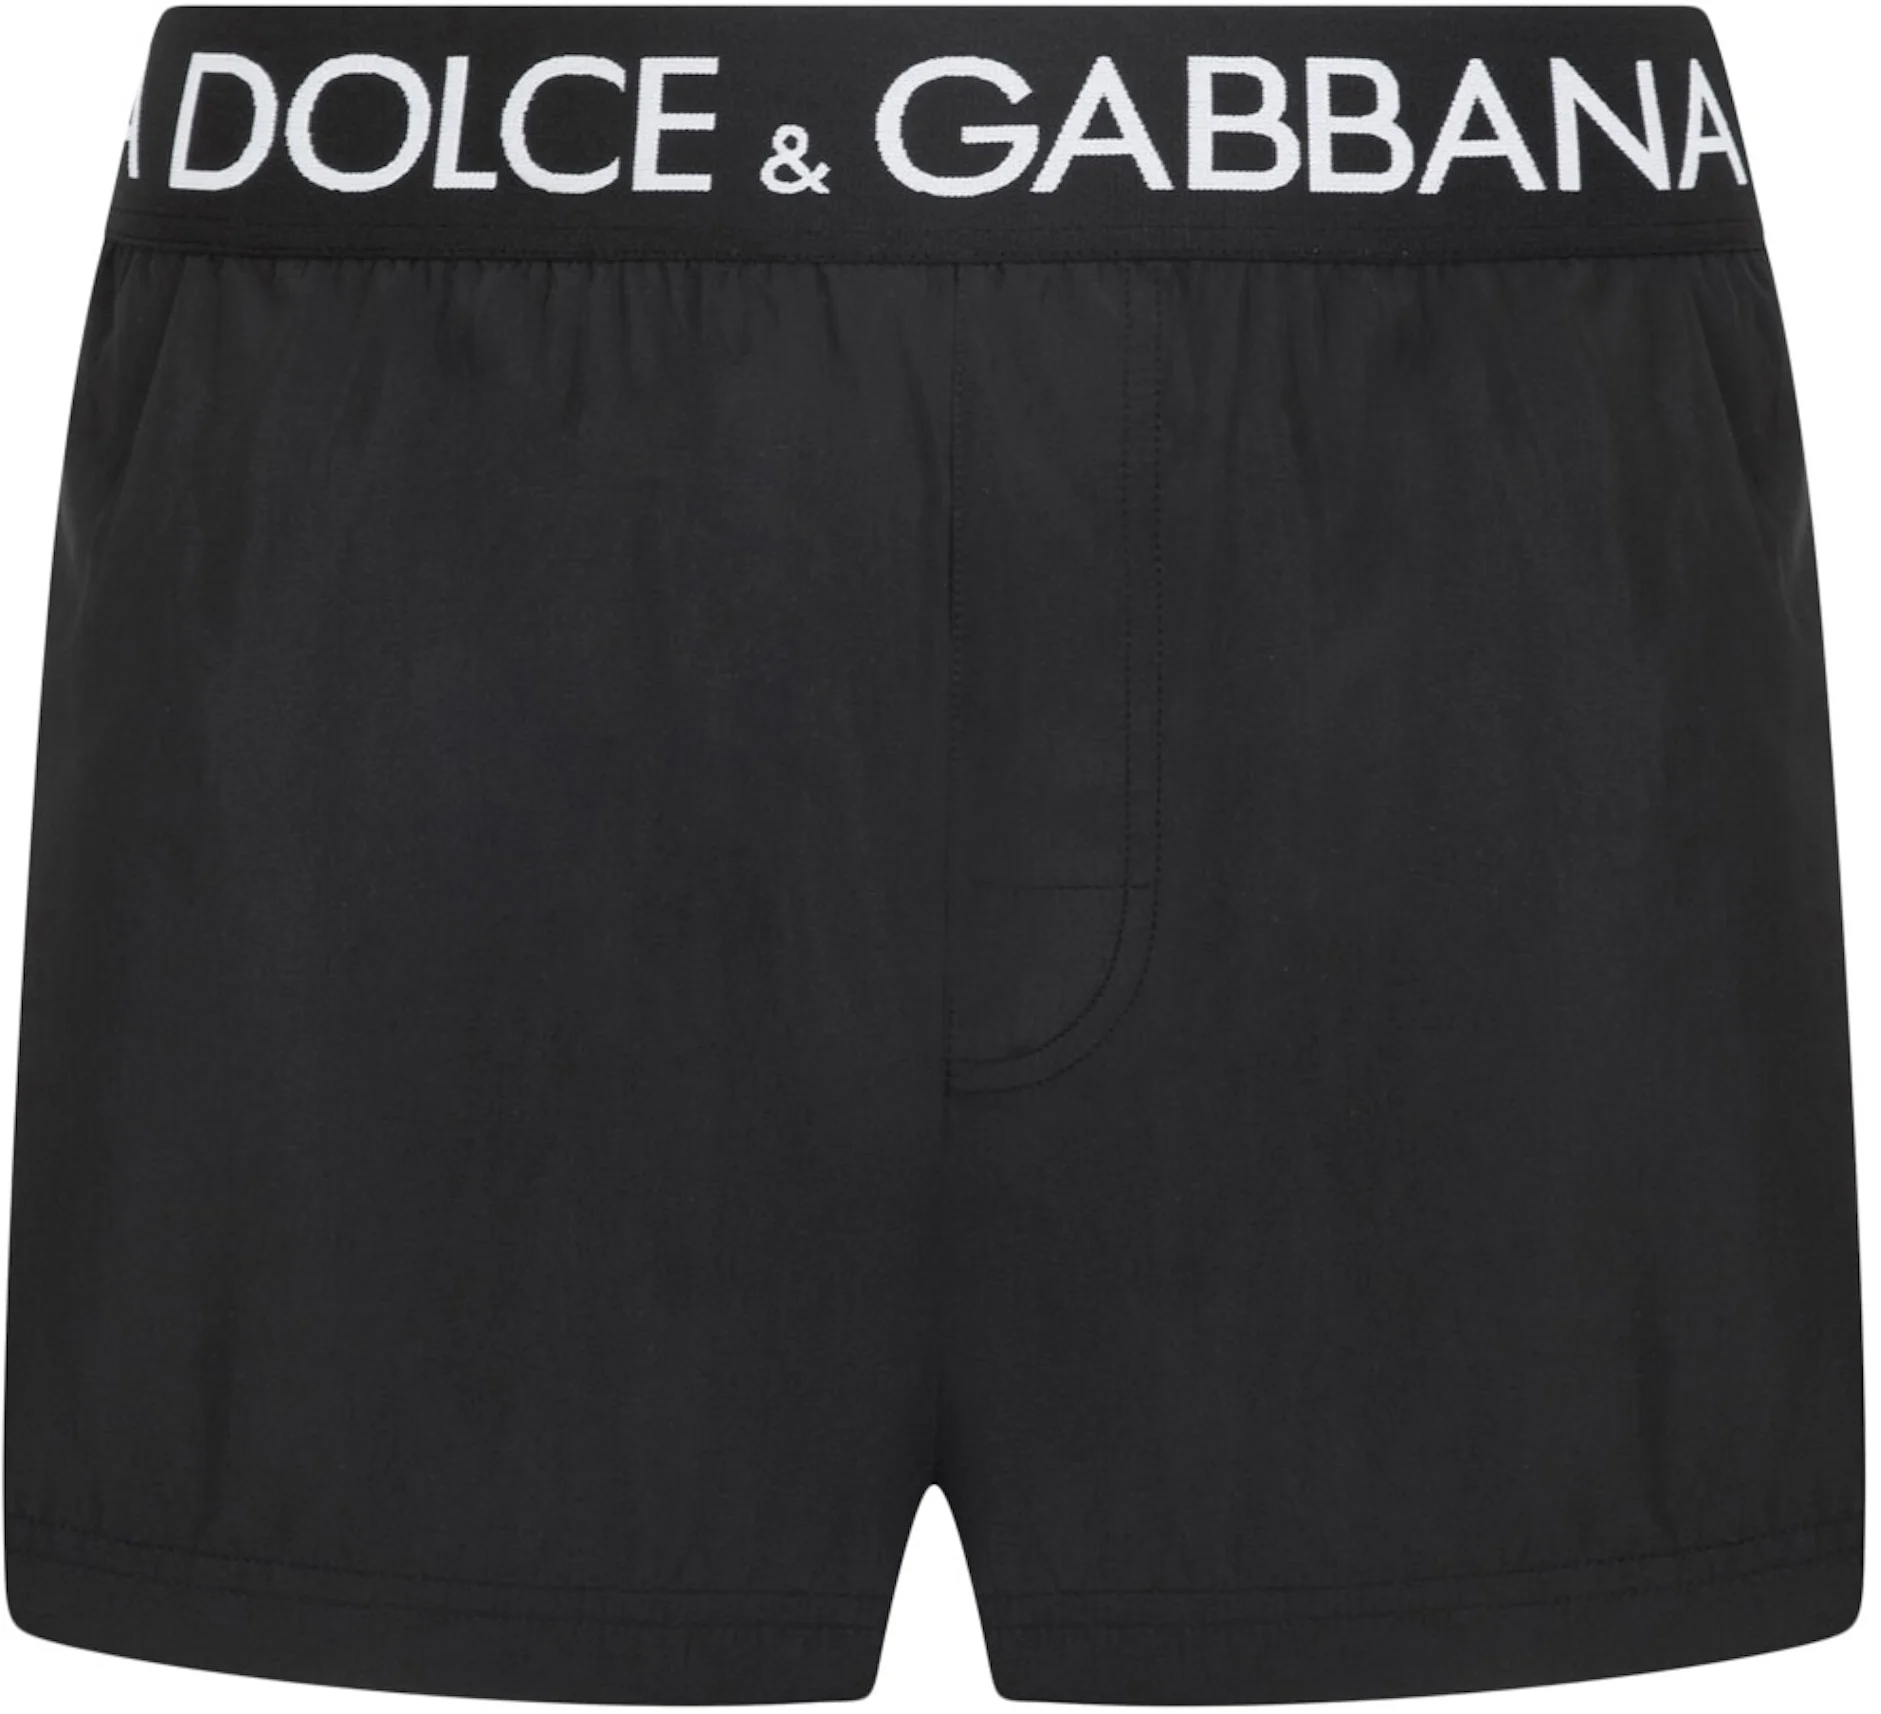 https://images.stockx.com/images/Dolce-Gabbana-Logo-Band-Swim-Shorts-Black-White.jpg?fit=fill&bg=FFFFFF&w=1200&h=857&fm=webp&auto=compress&dpr=2&trim=color&updated_at=1658404109&q=60